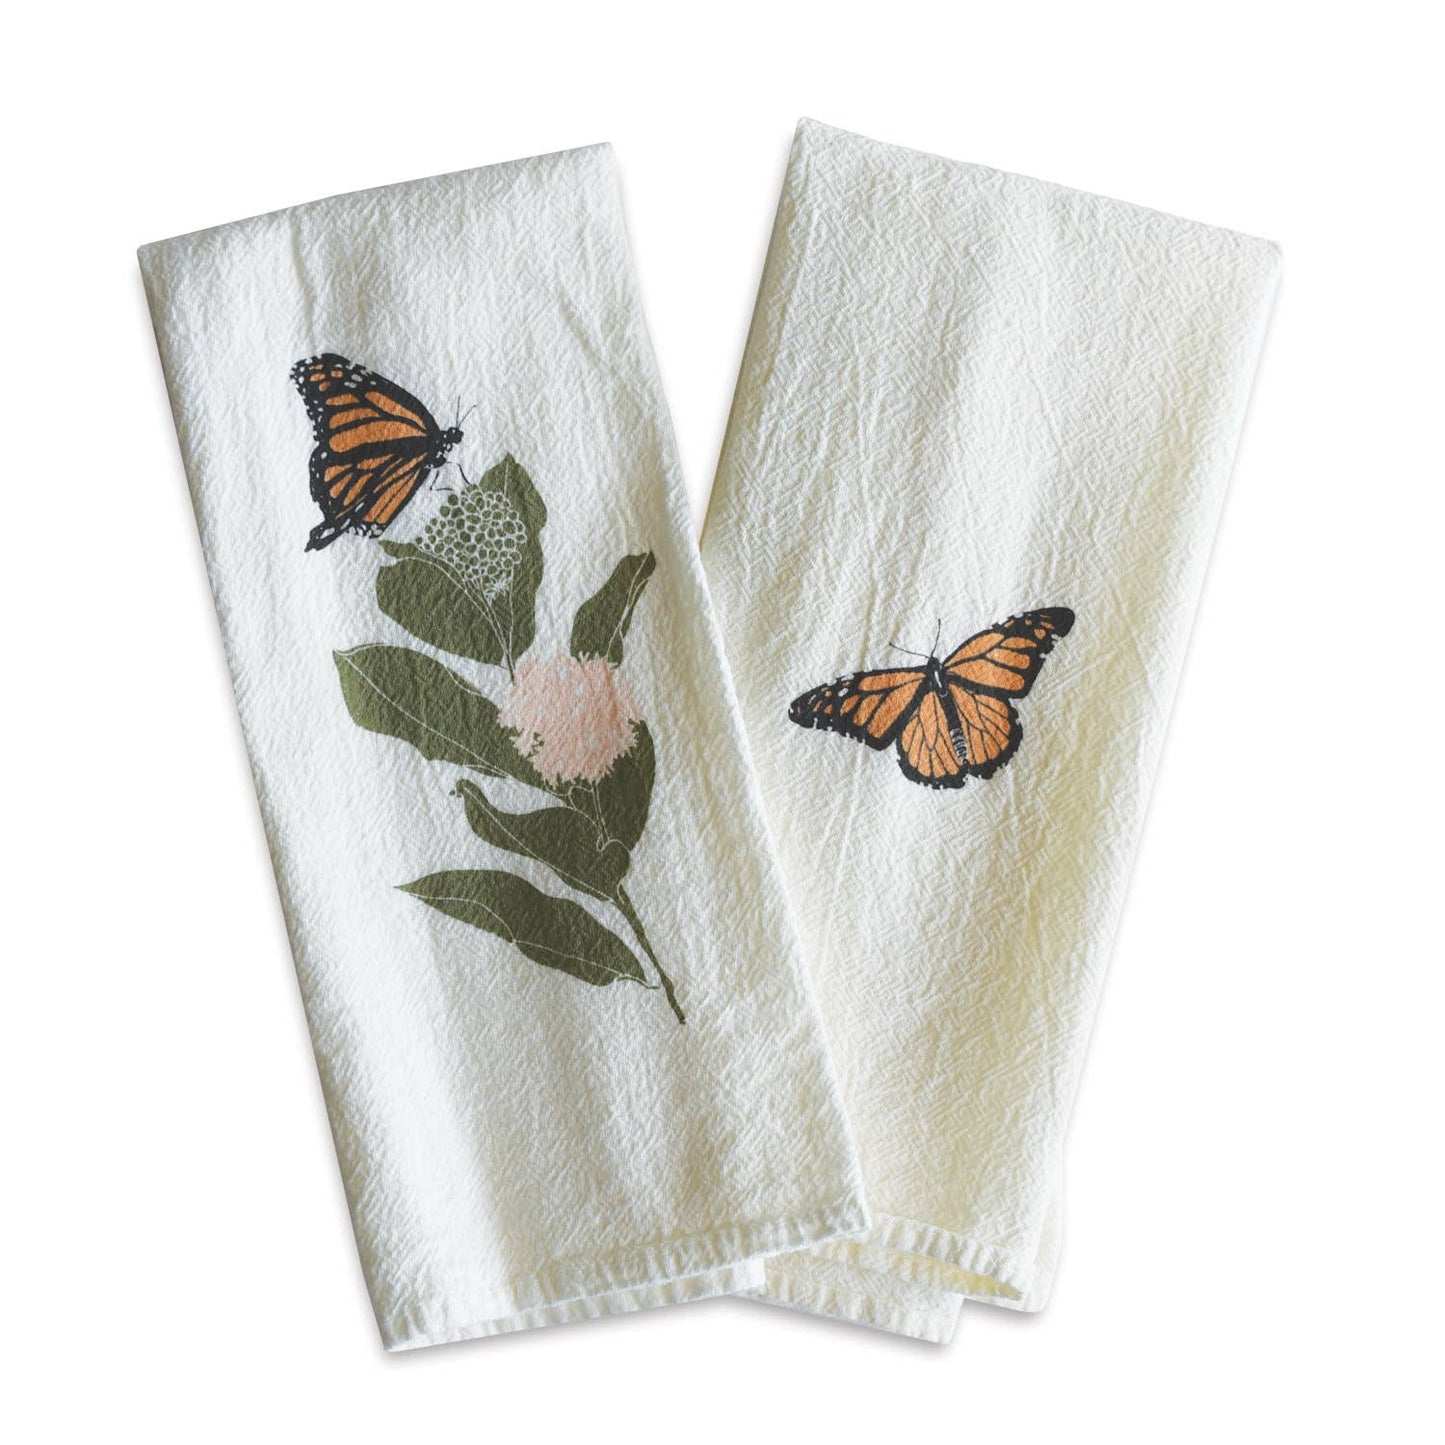 Monarch napkins by June & December